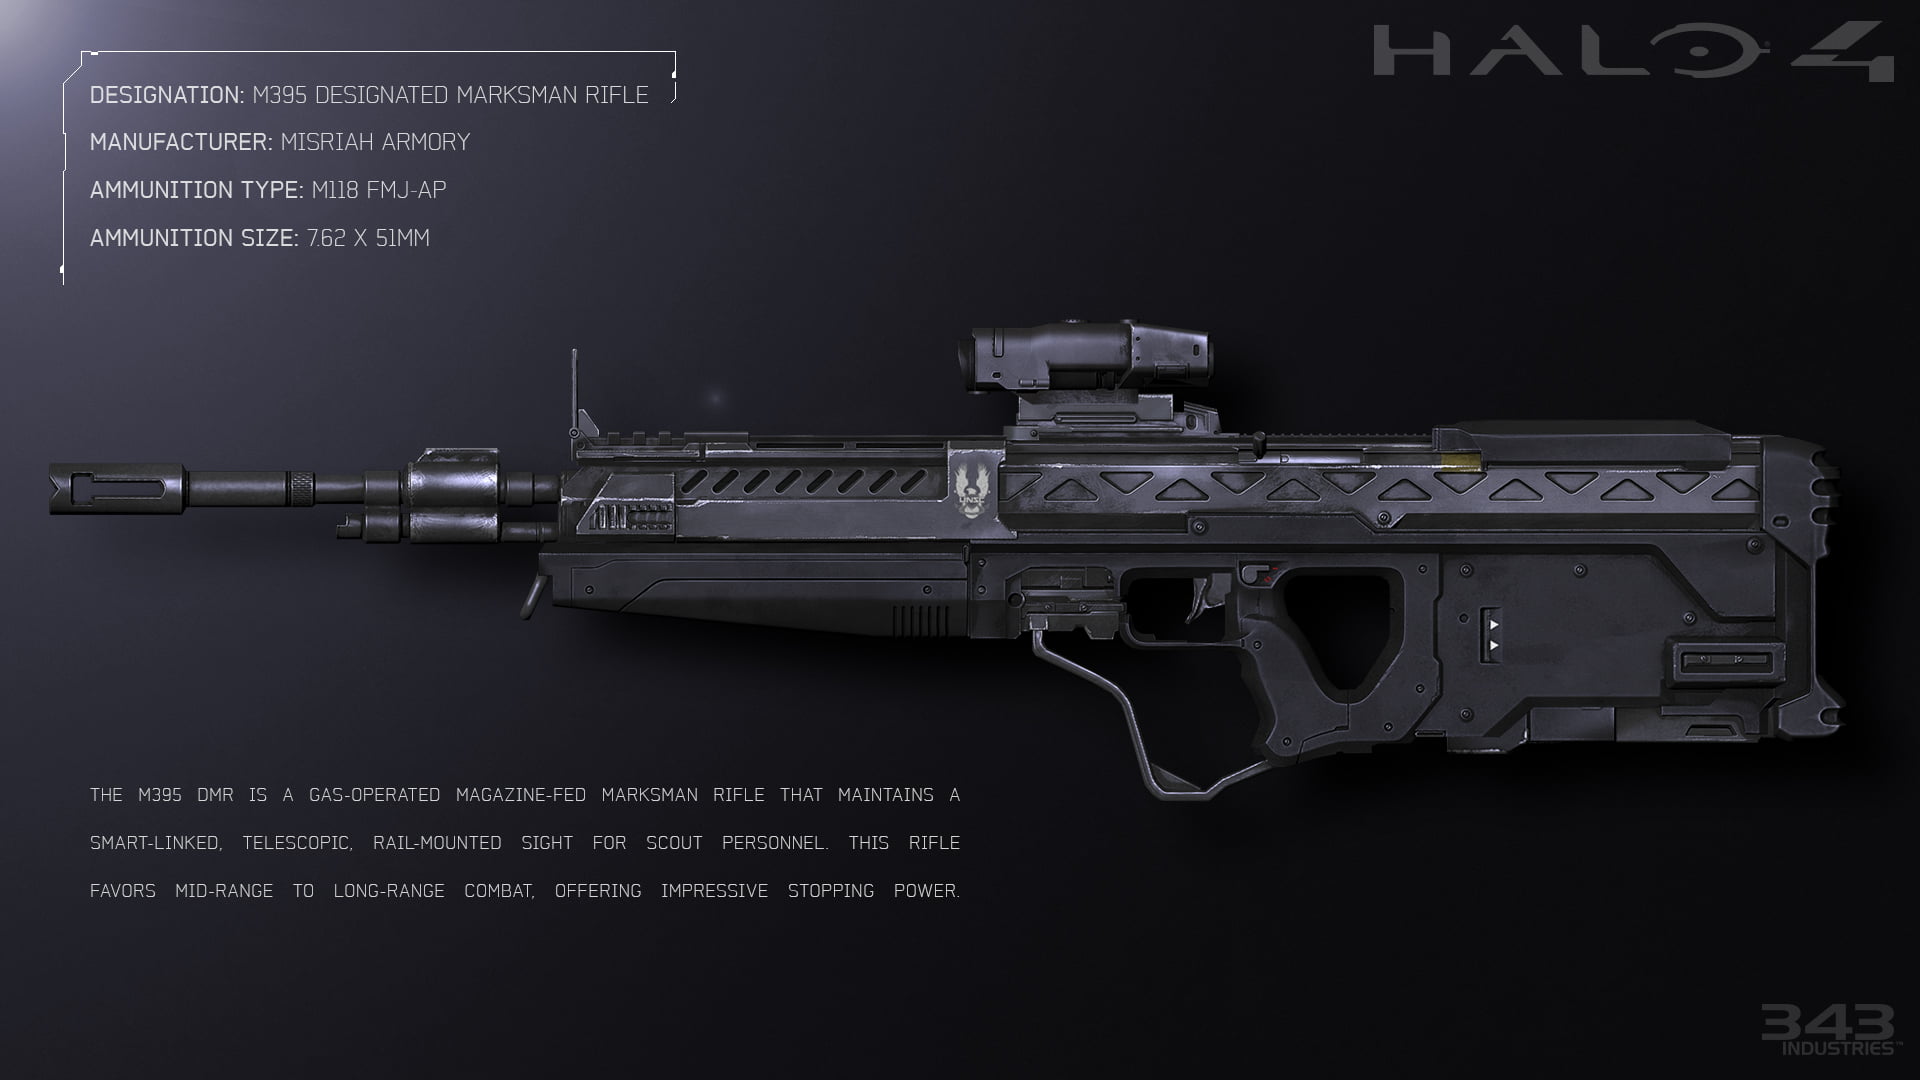 gray Halo 4 rifle illustration, gun, video games, weapon, aggression